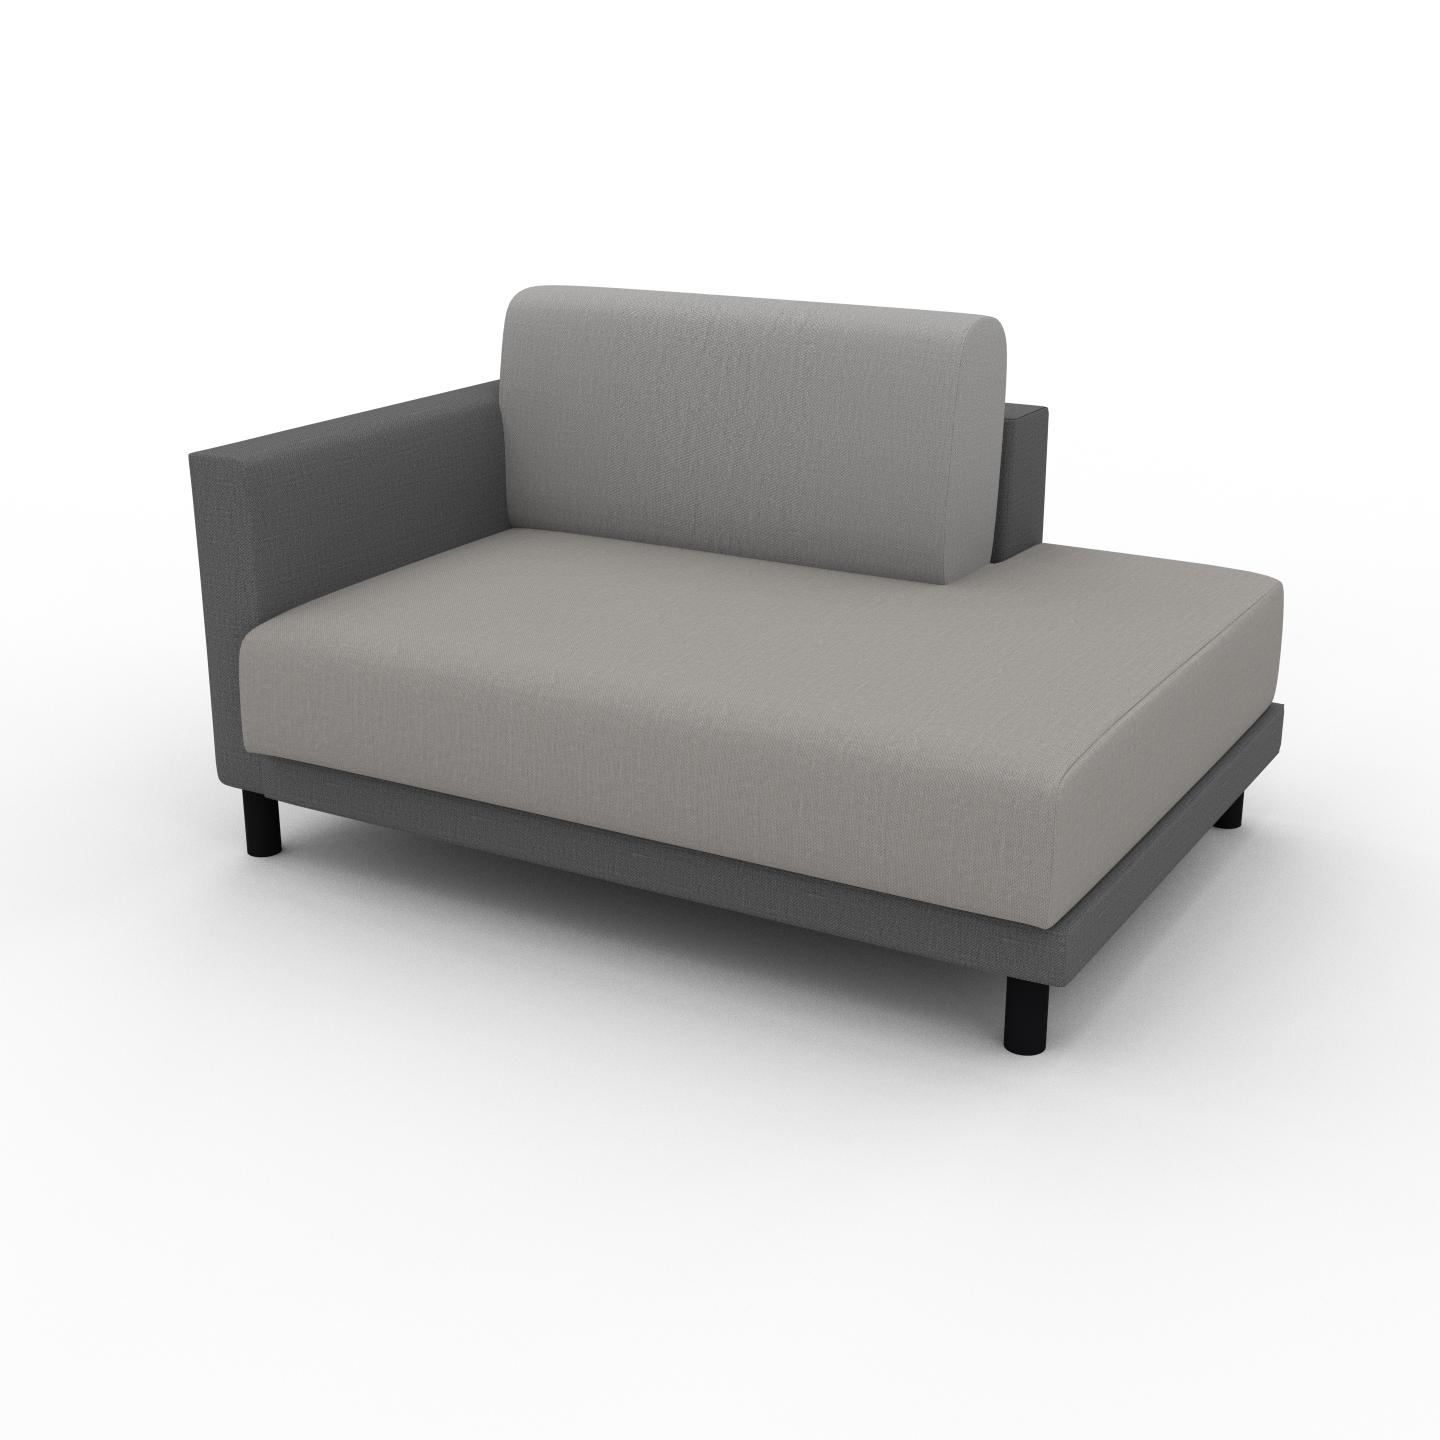 MYCS Sessel Sandgrau - Eleganter Sessel: Hochwertige Qualität, einzigartiges Design - 132 x 75 x 98 cm, Individuell konfigurierbar